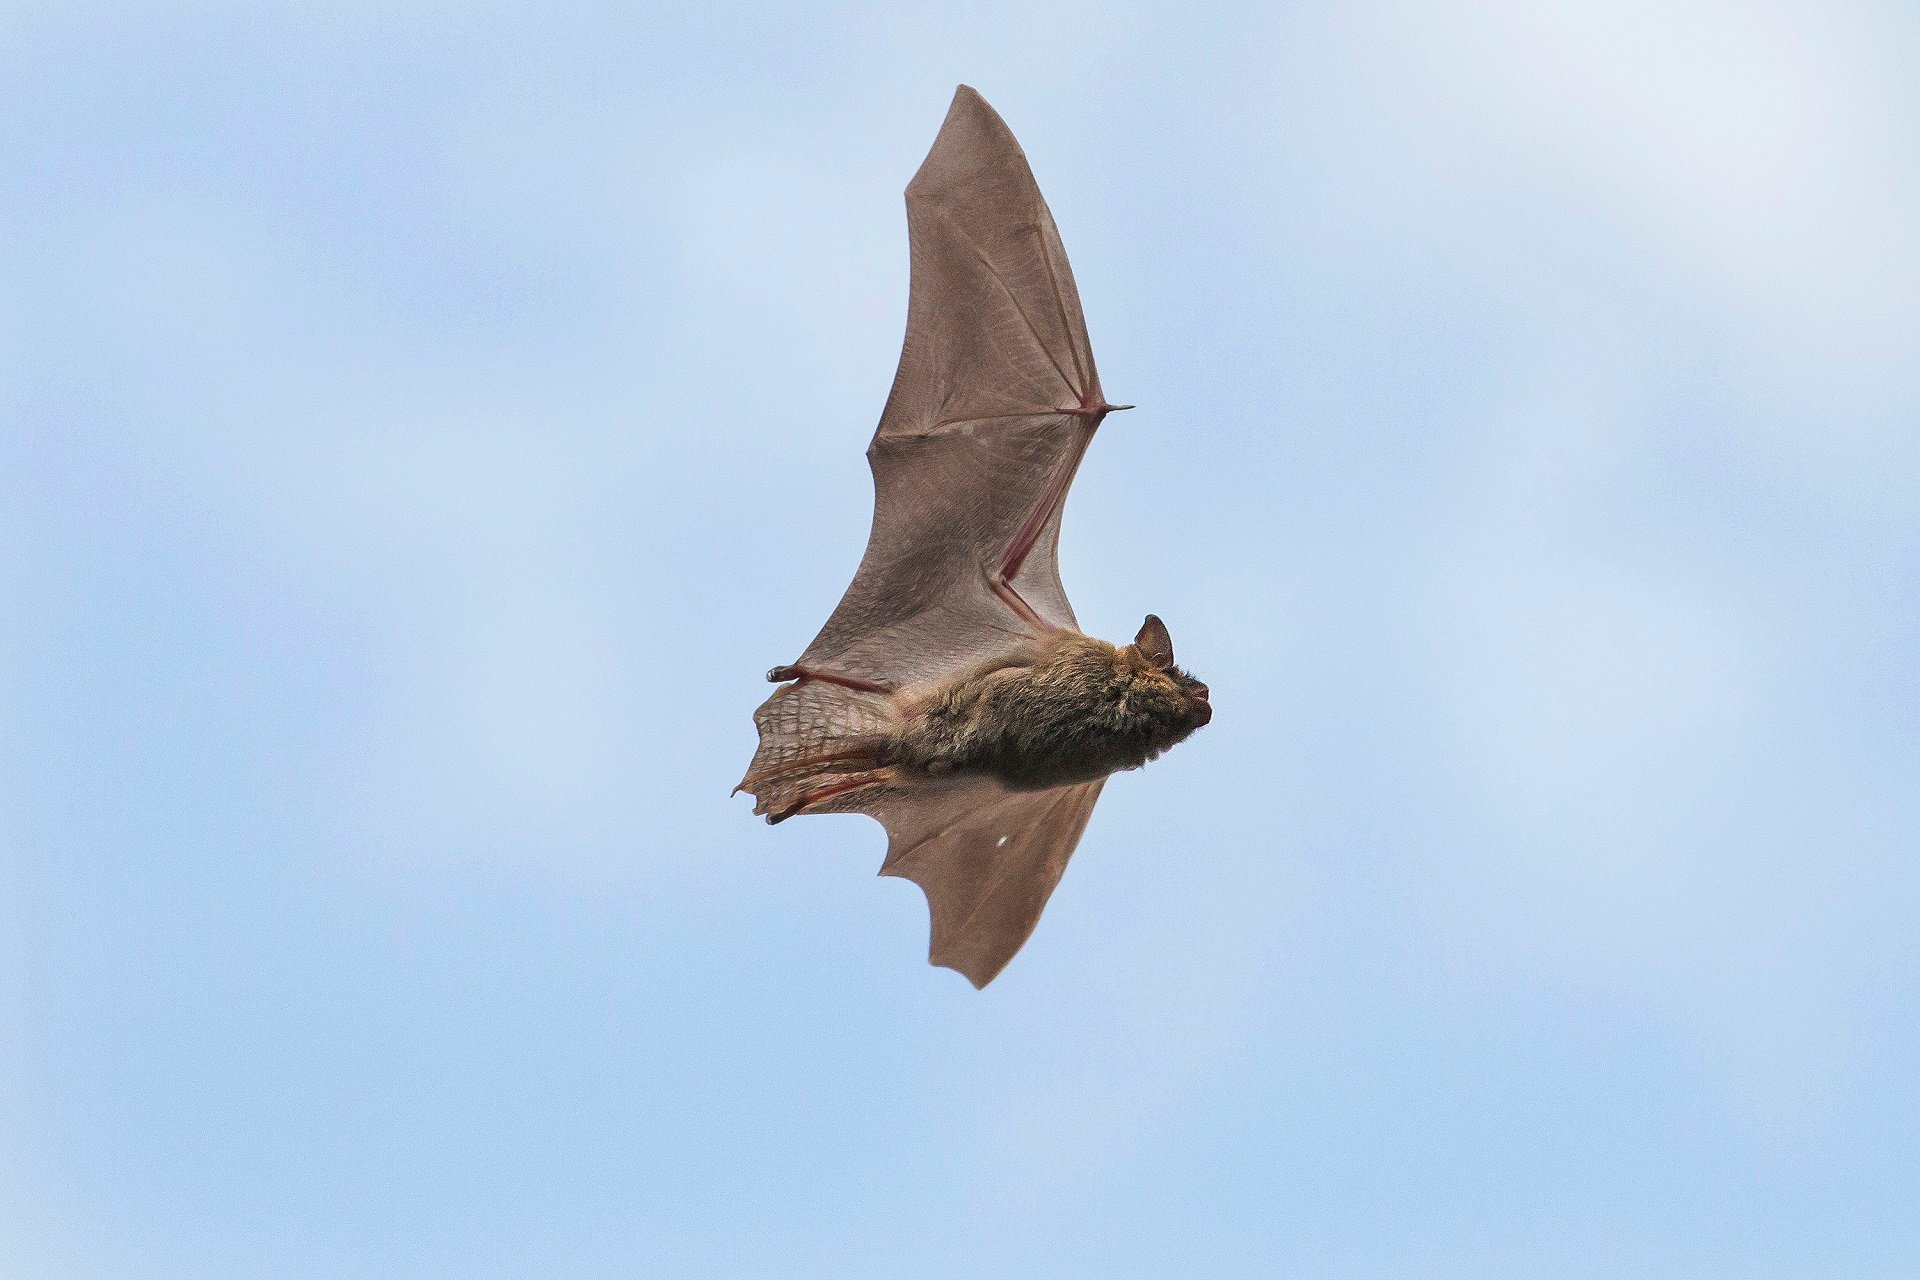 A bat flies through sky during the day.